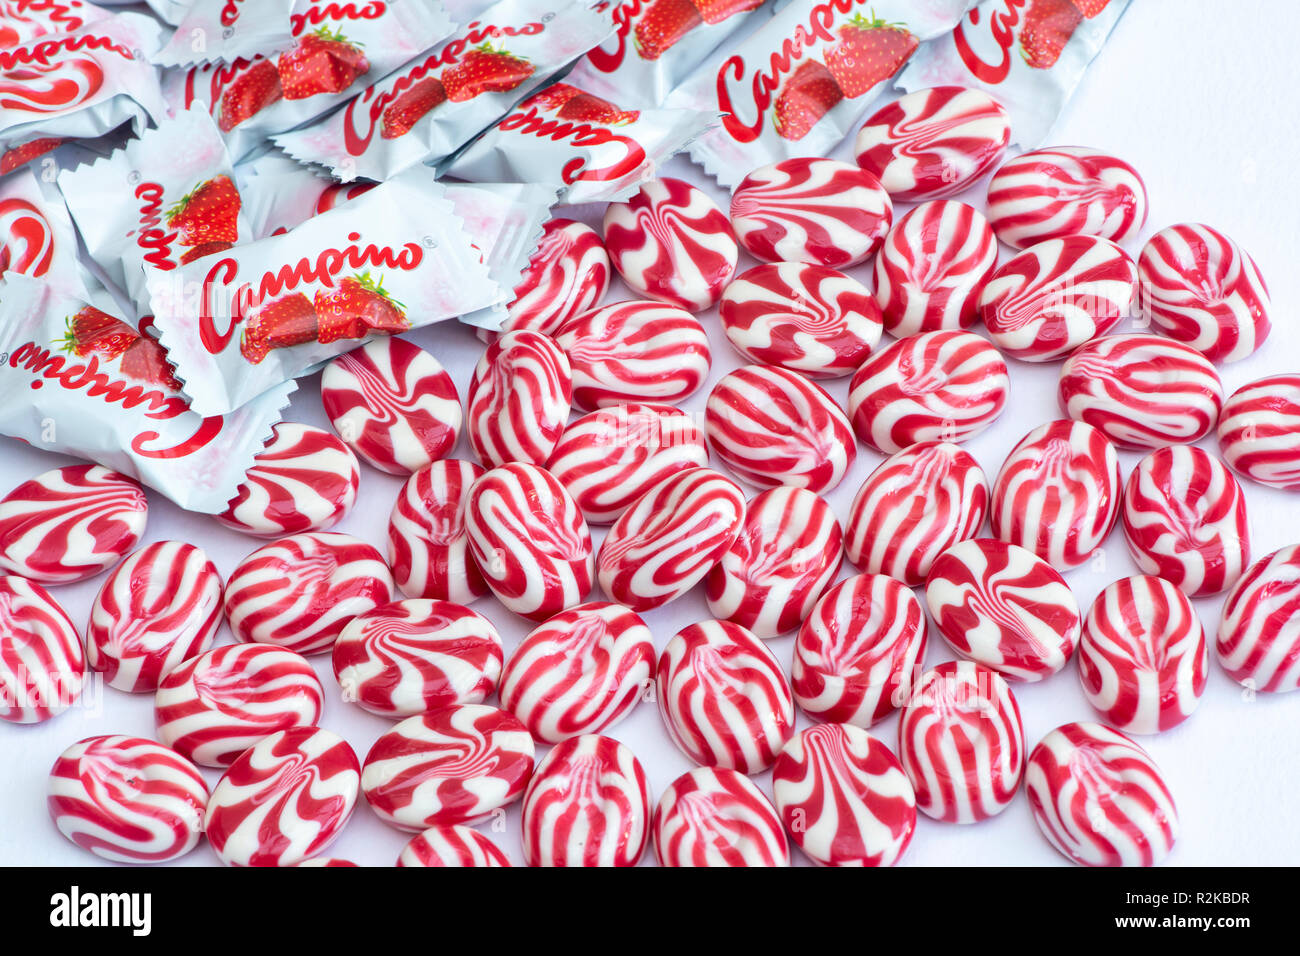 Campino Süßigkeiten. Campino Joghurt & Obst Harte Süßigkeiten Erdbeere  Stockfotografie - Alamy